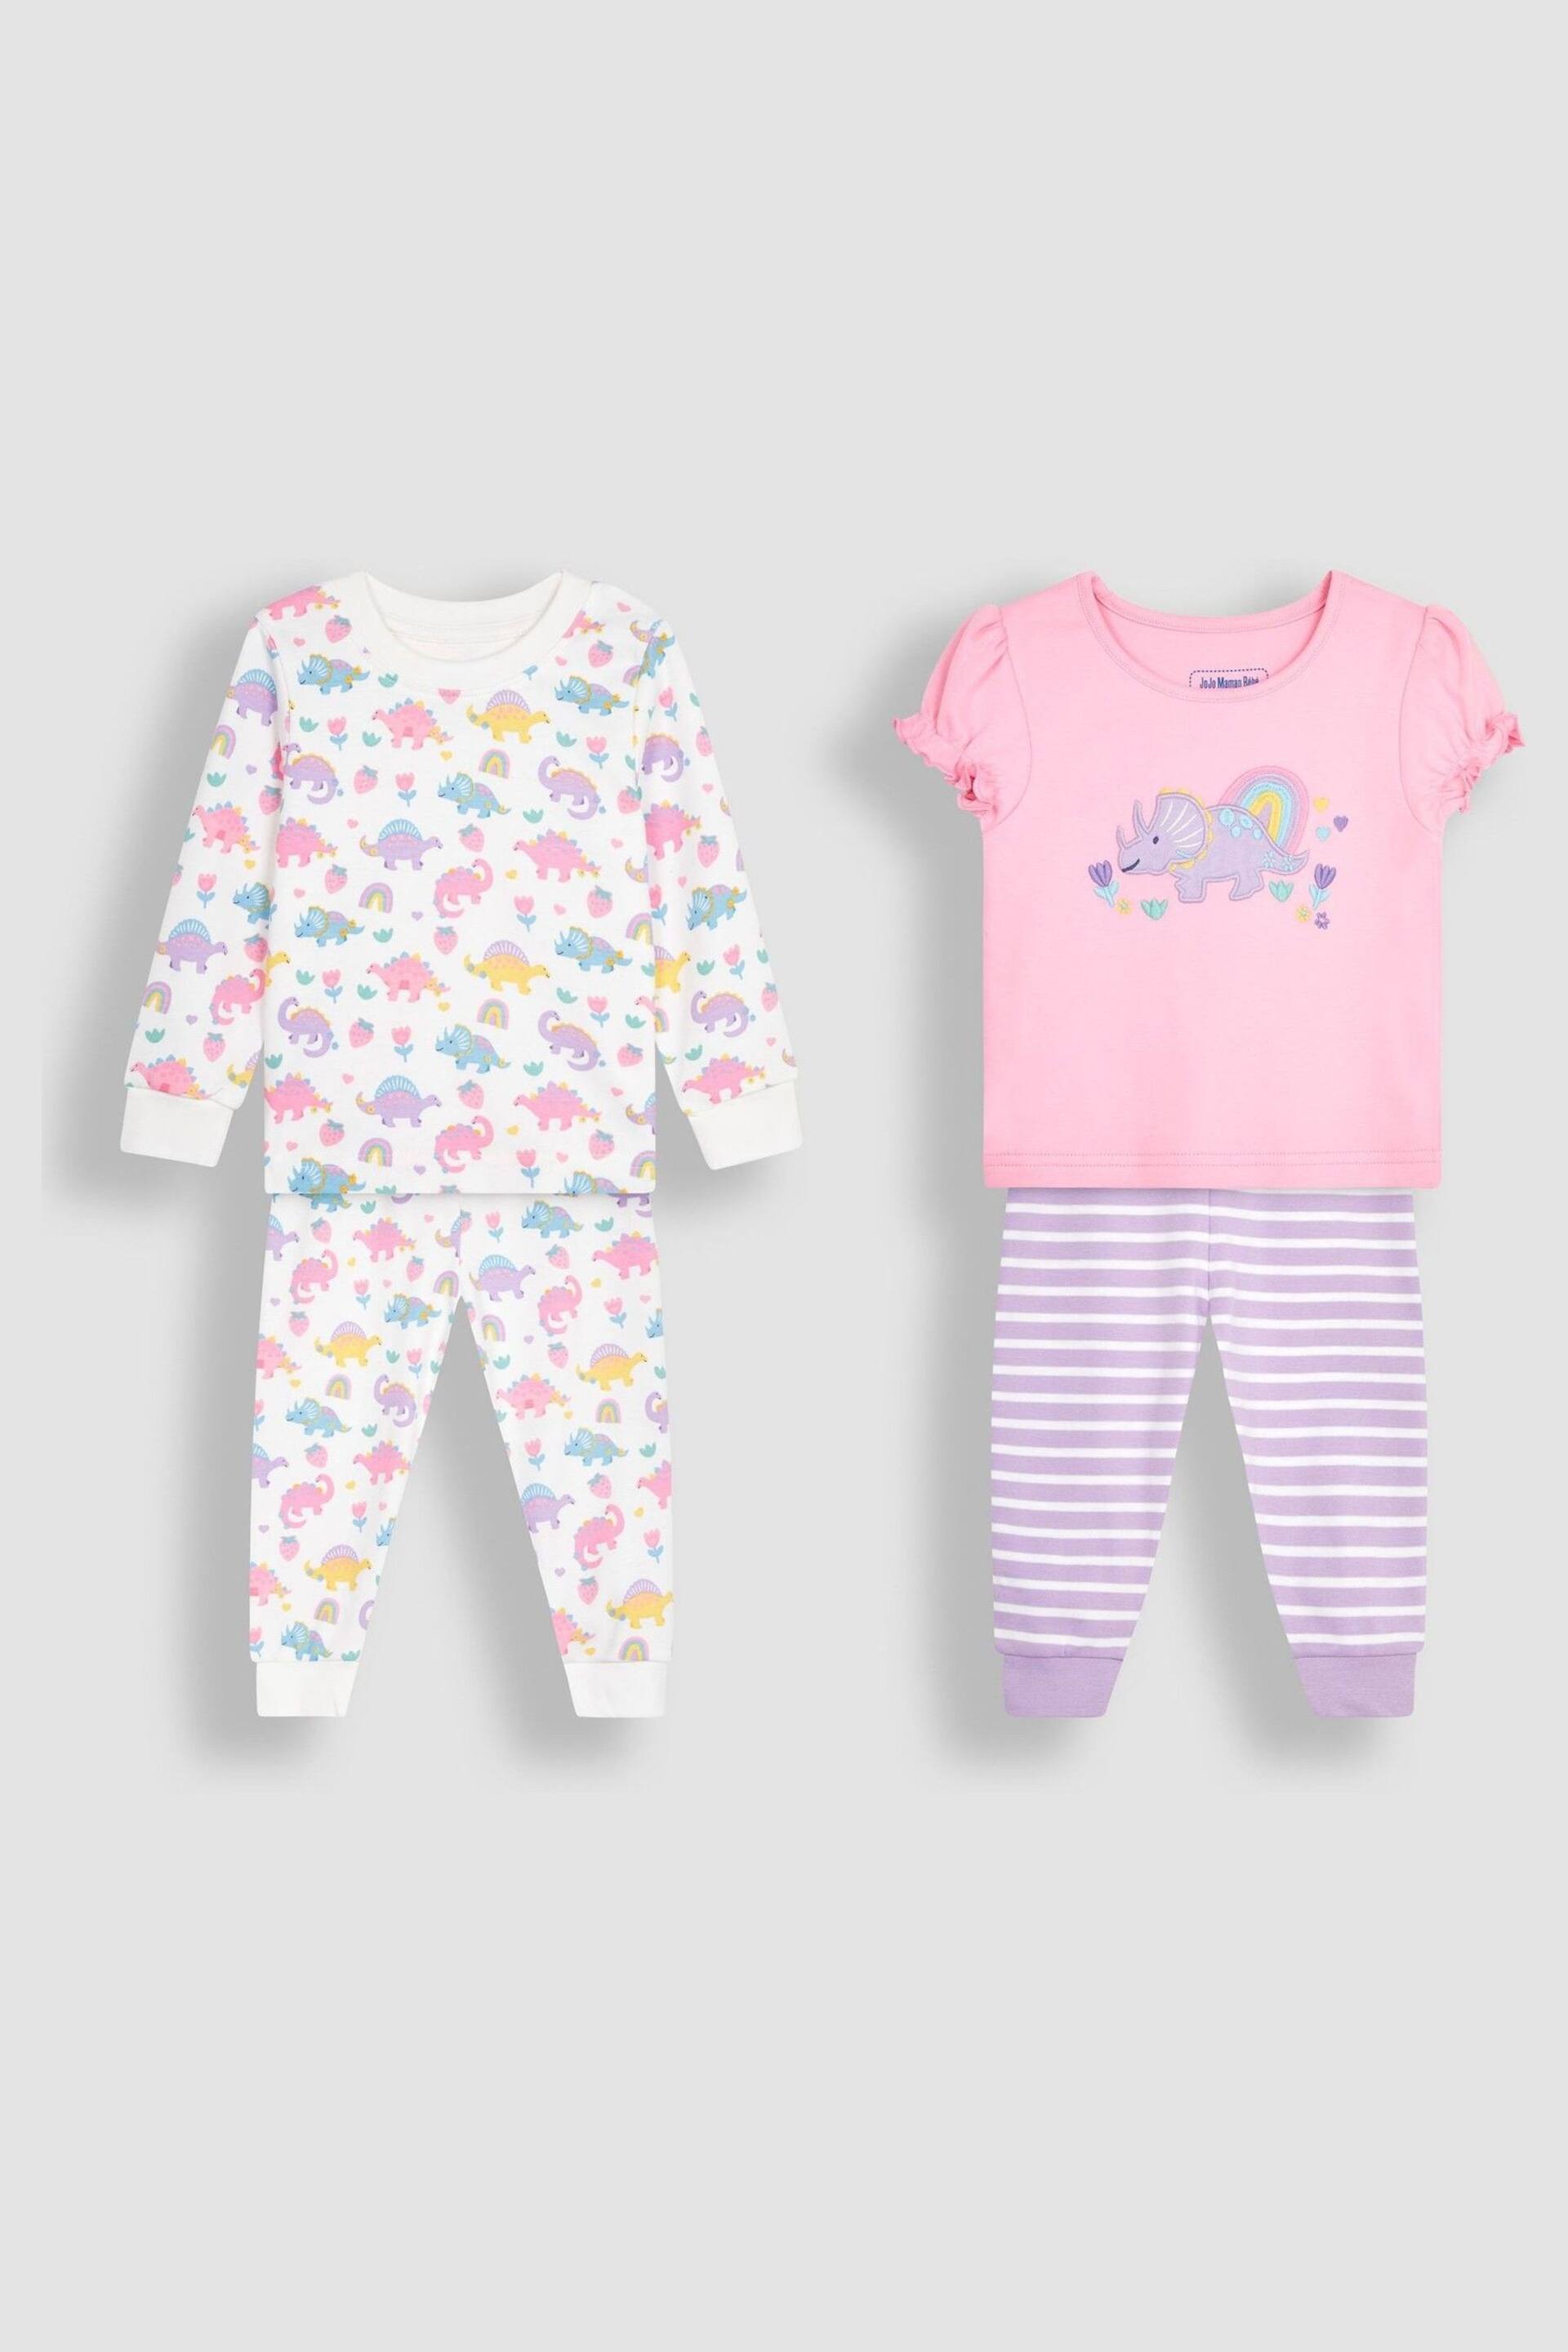 JoJo Maman Bébé Pink 2-Pack Dino Jersey Pyjamas - Image 1 of 9